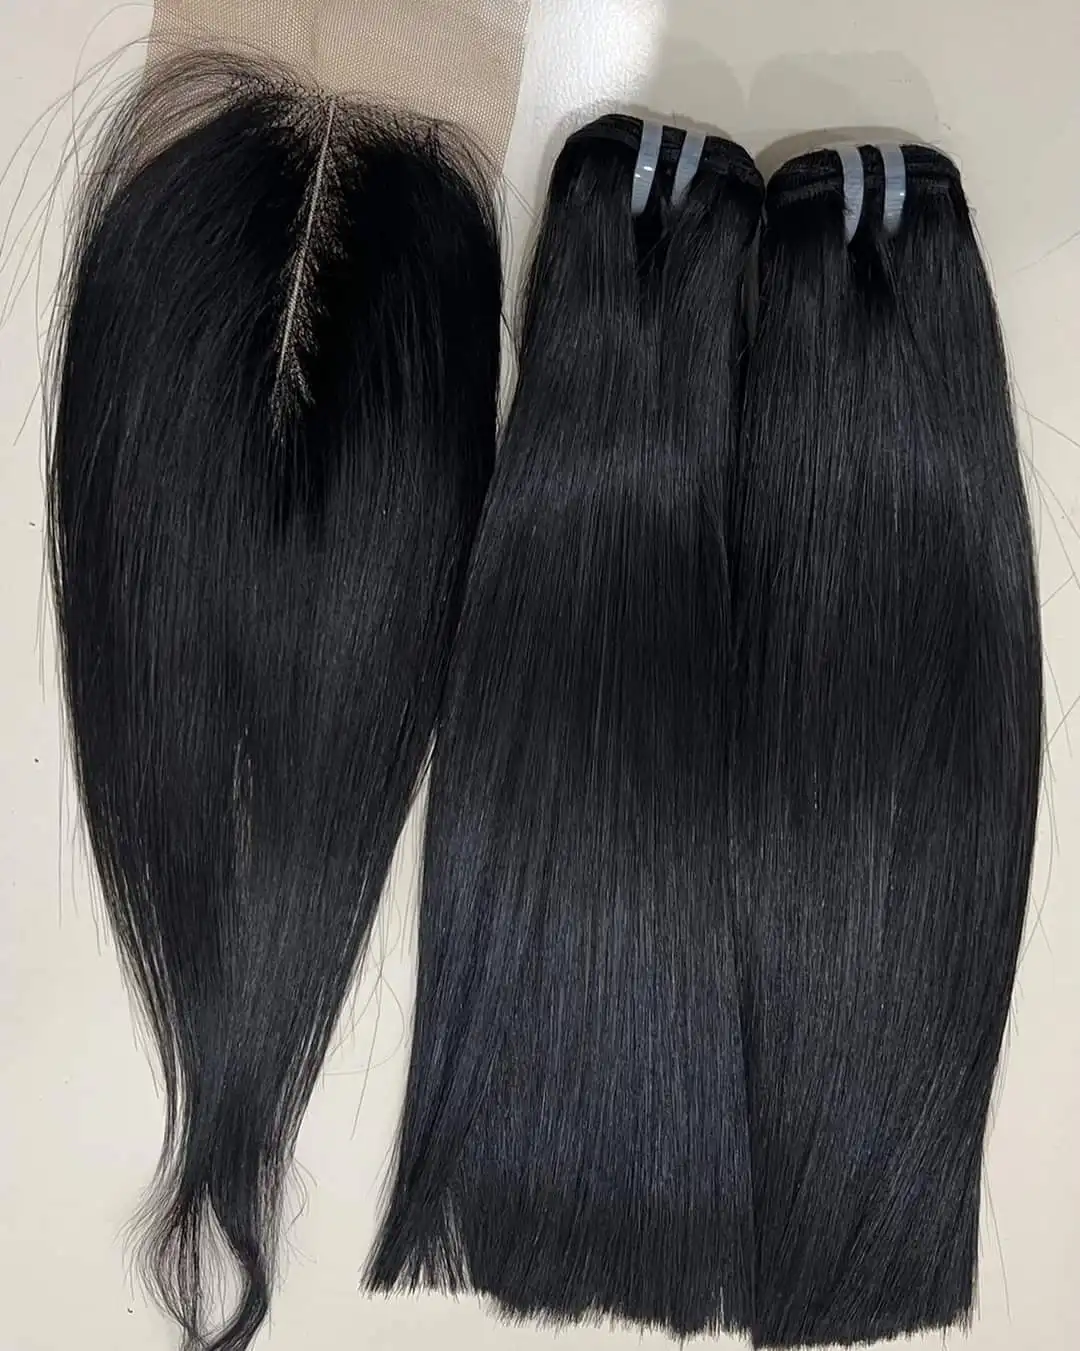 180% Design parrucche per capelli umani per donne nere, parrucca per capelli peruviani vergini giovanili, parrucca per capelli umani con parte anteriore in pizzo 13 x4 grezzo naturale